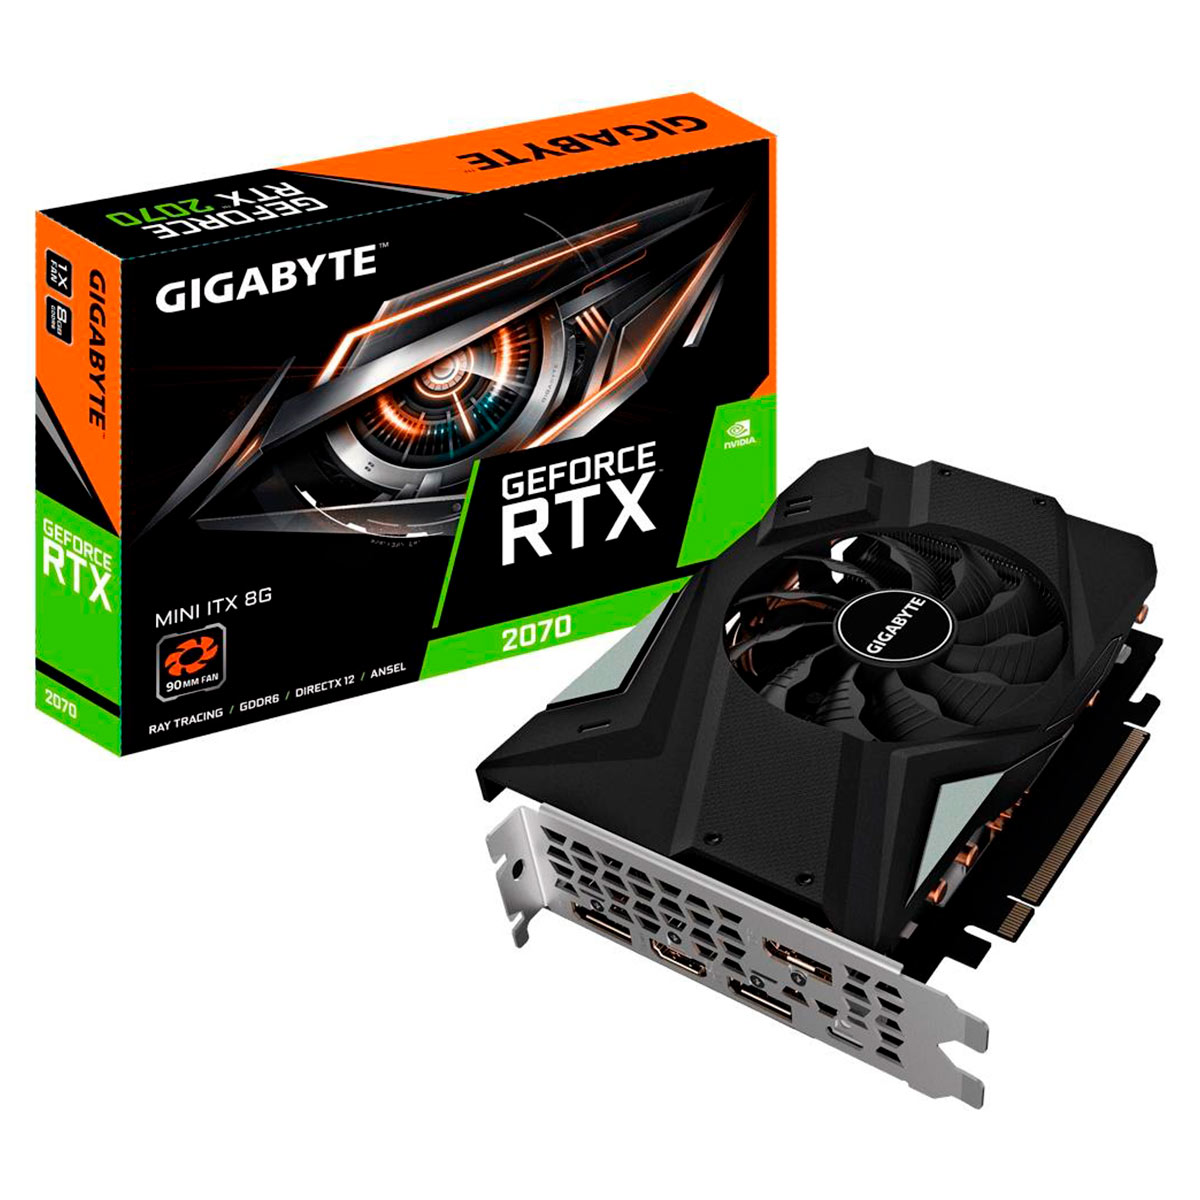 GeForce RTX 2070 8GB GDDR6 256bits - Mini ITX - Gigabyte GV-N2070IX-8GC